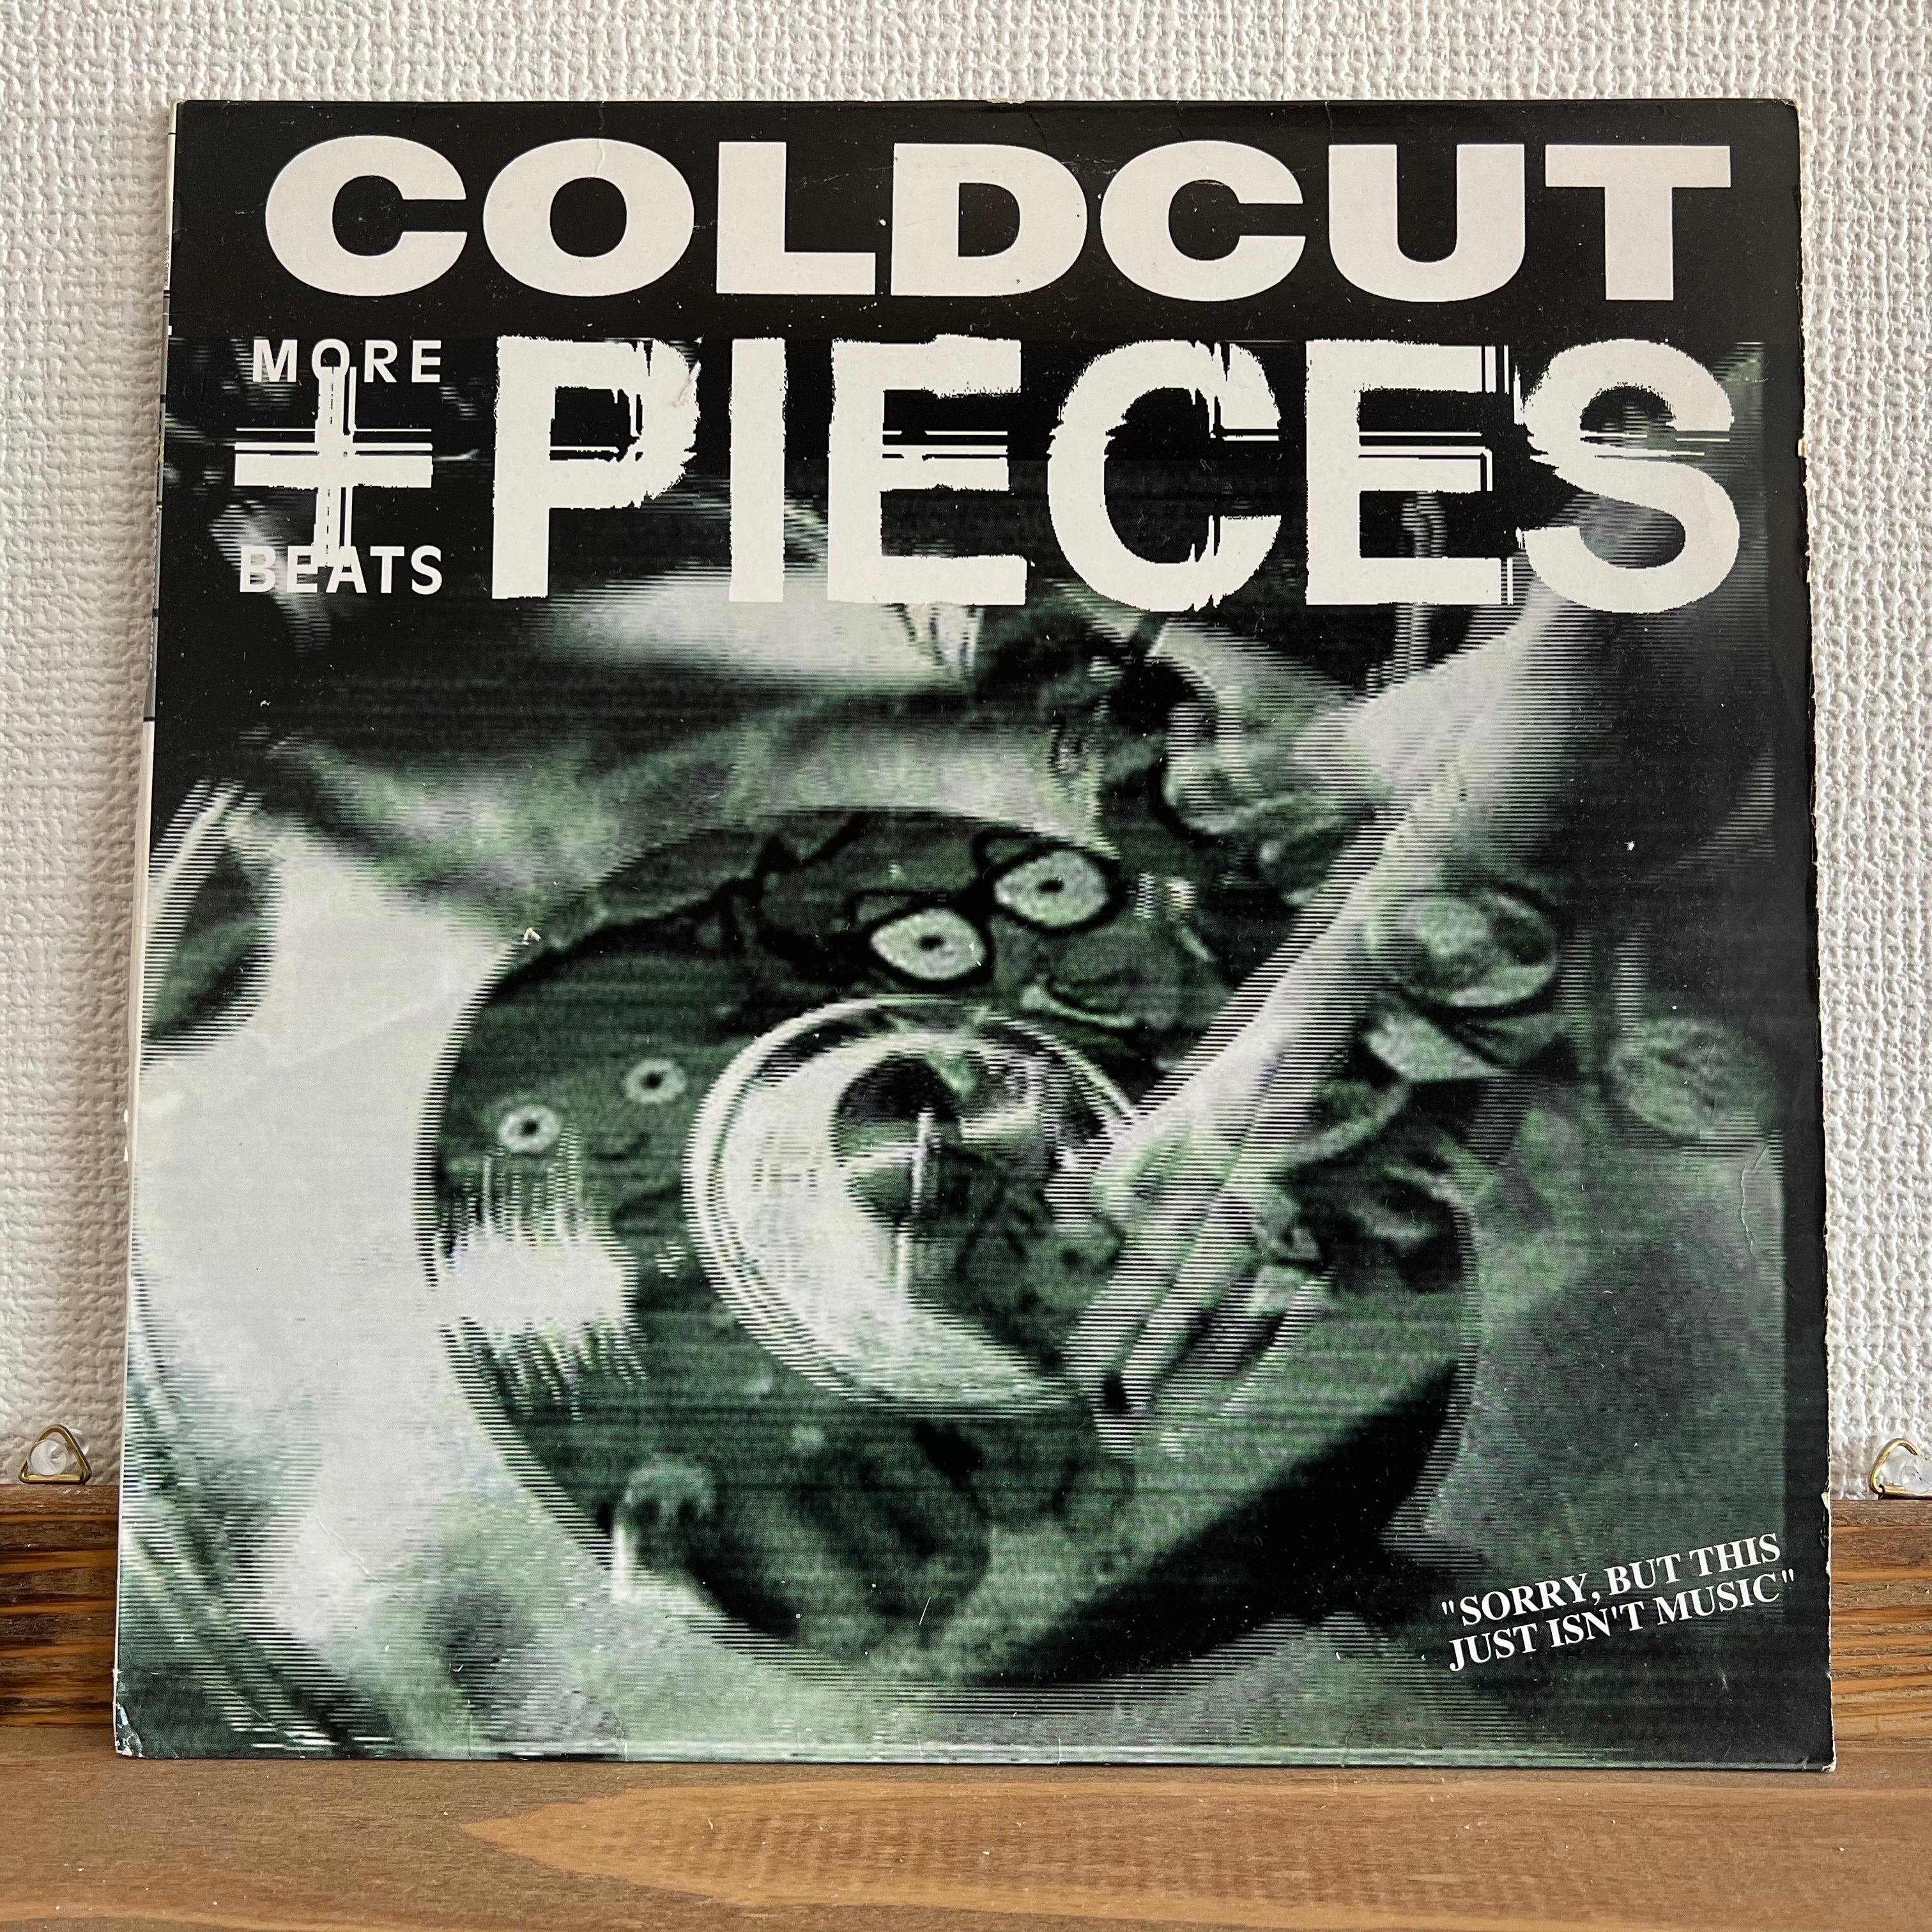 COLDCUT More Beats + Pieces 2枚組